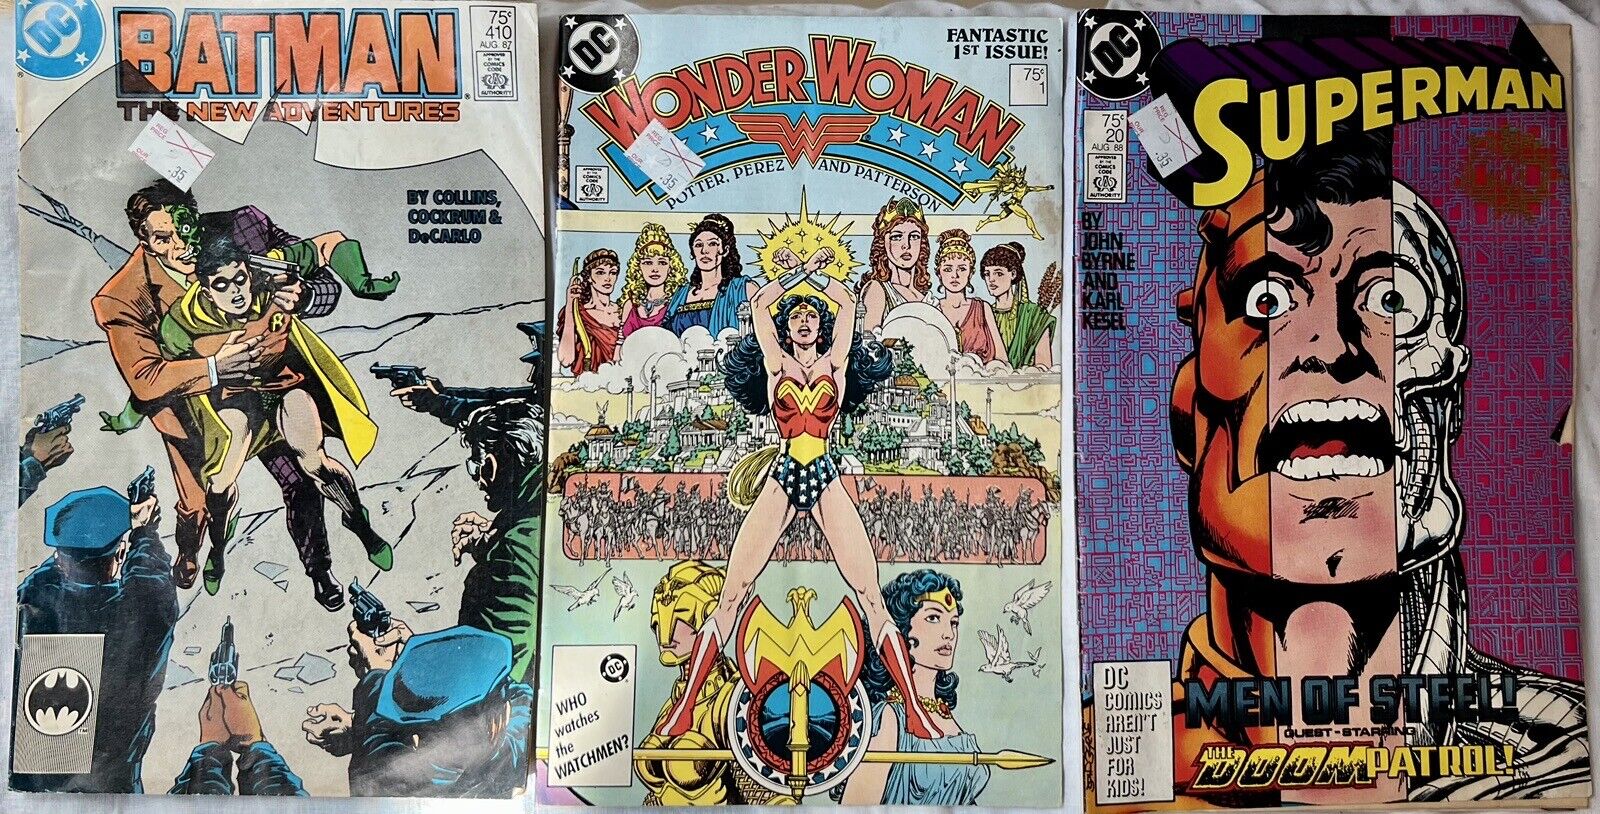 Wonder Woman (1987), Superman (1988), and Batman (1987) - Preowned